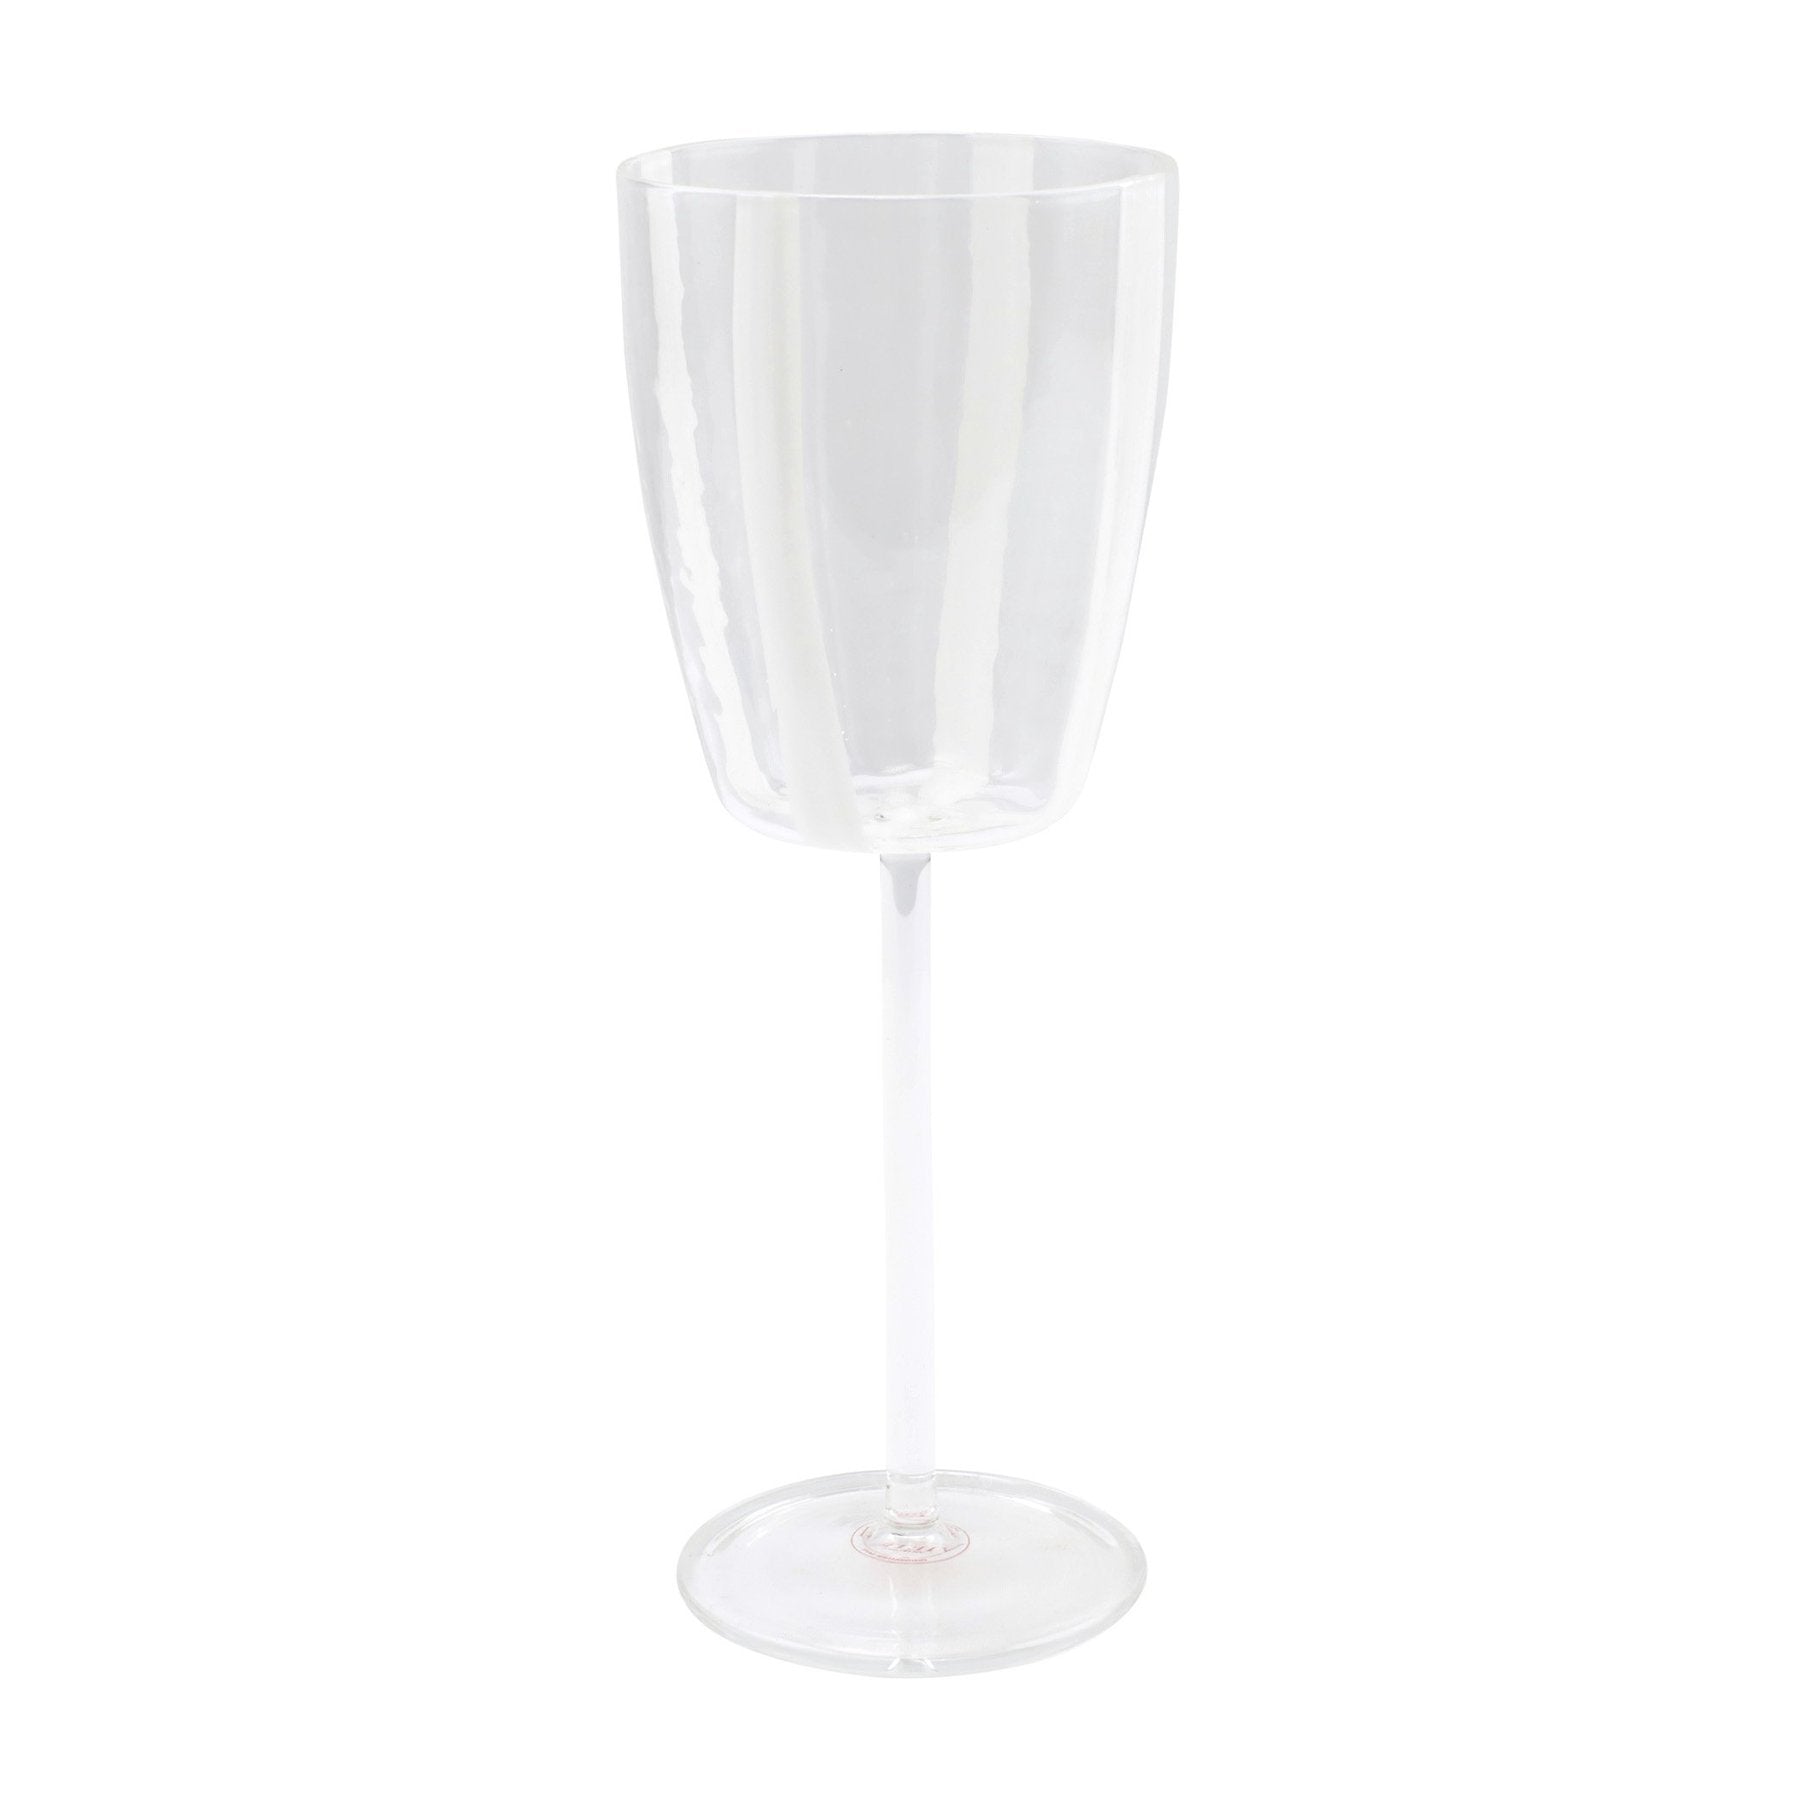 Stripe White Wine Glass